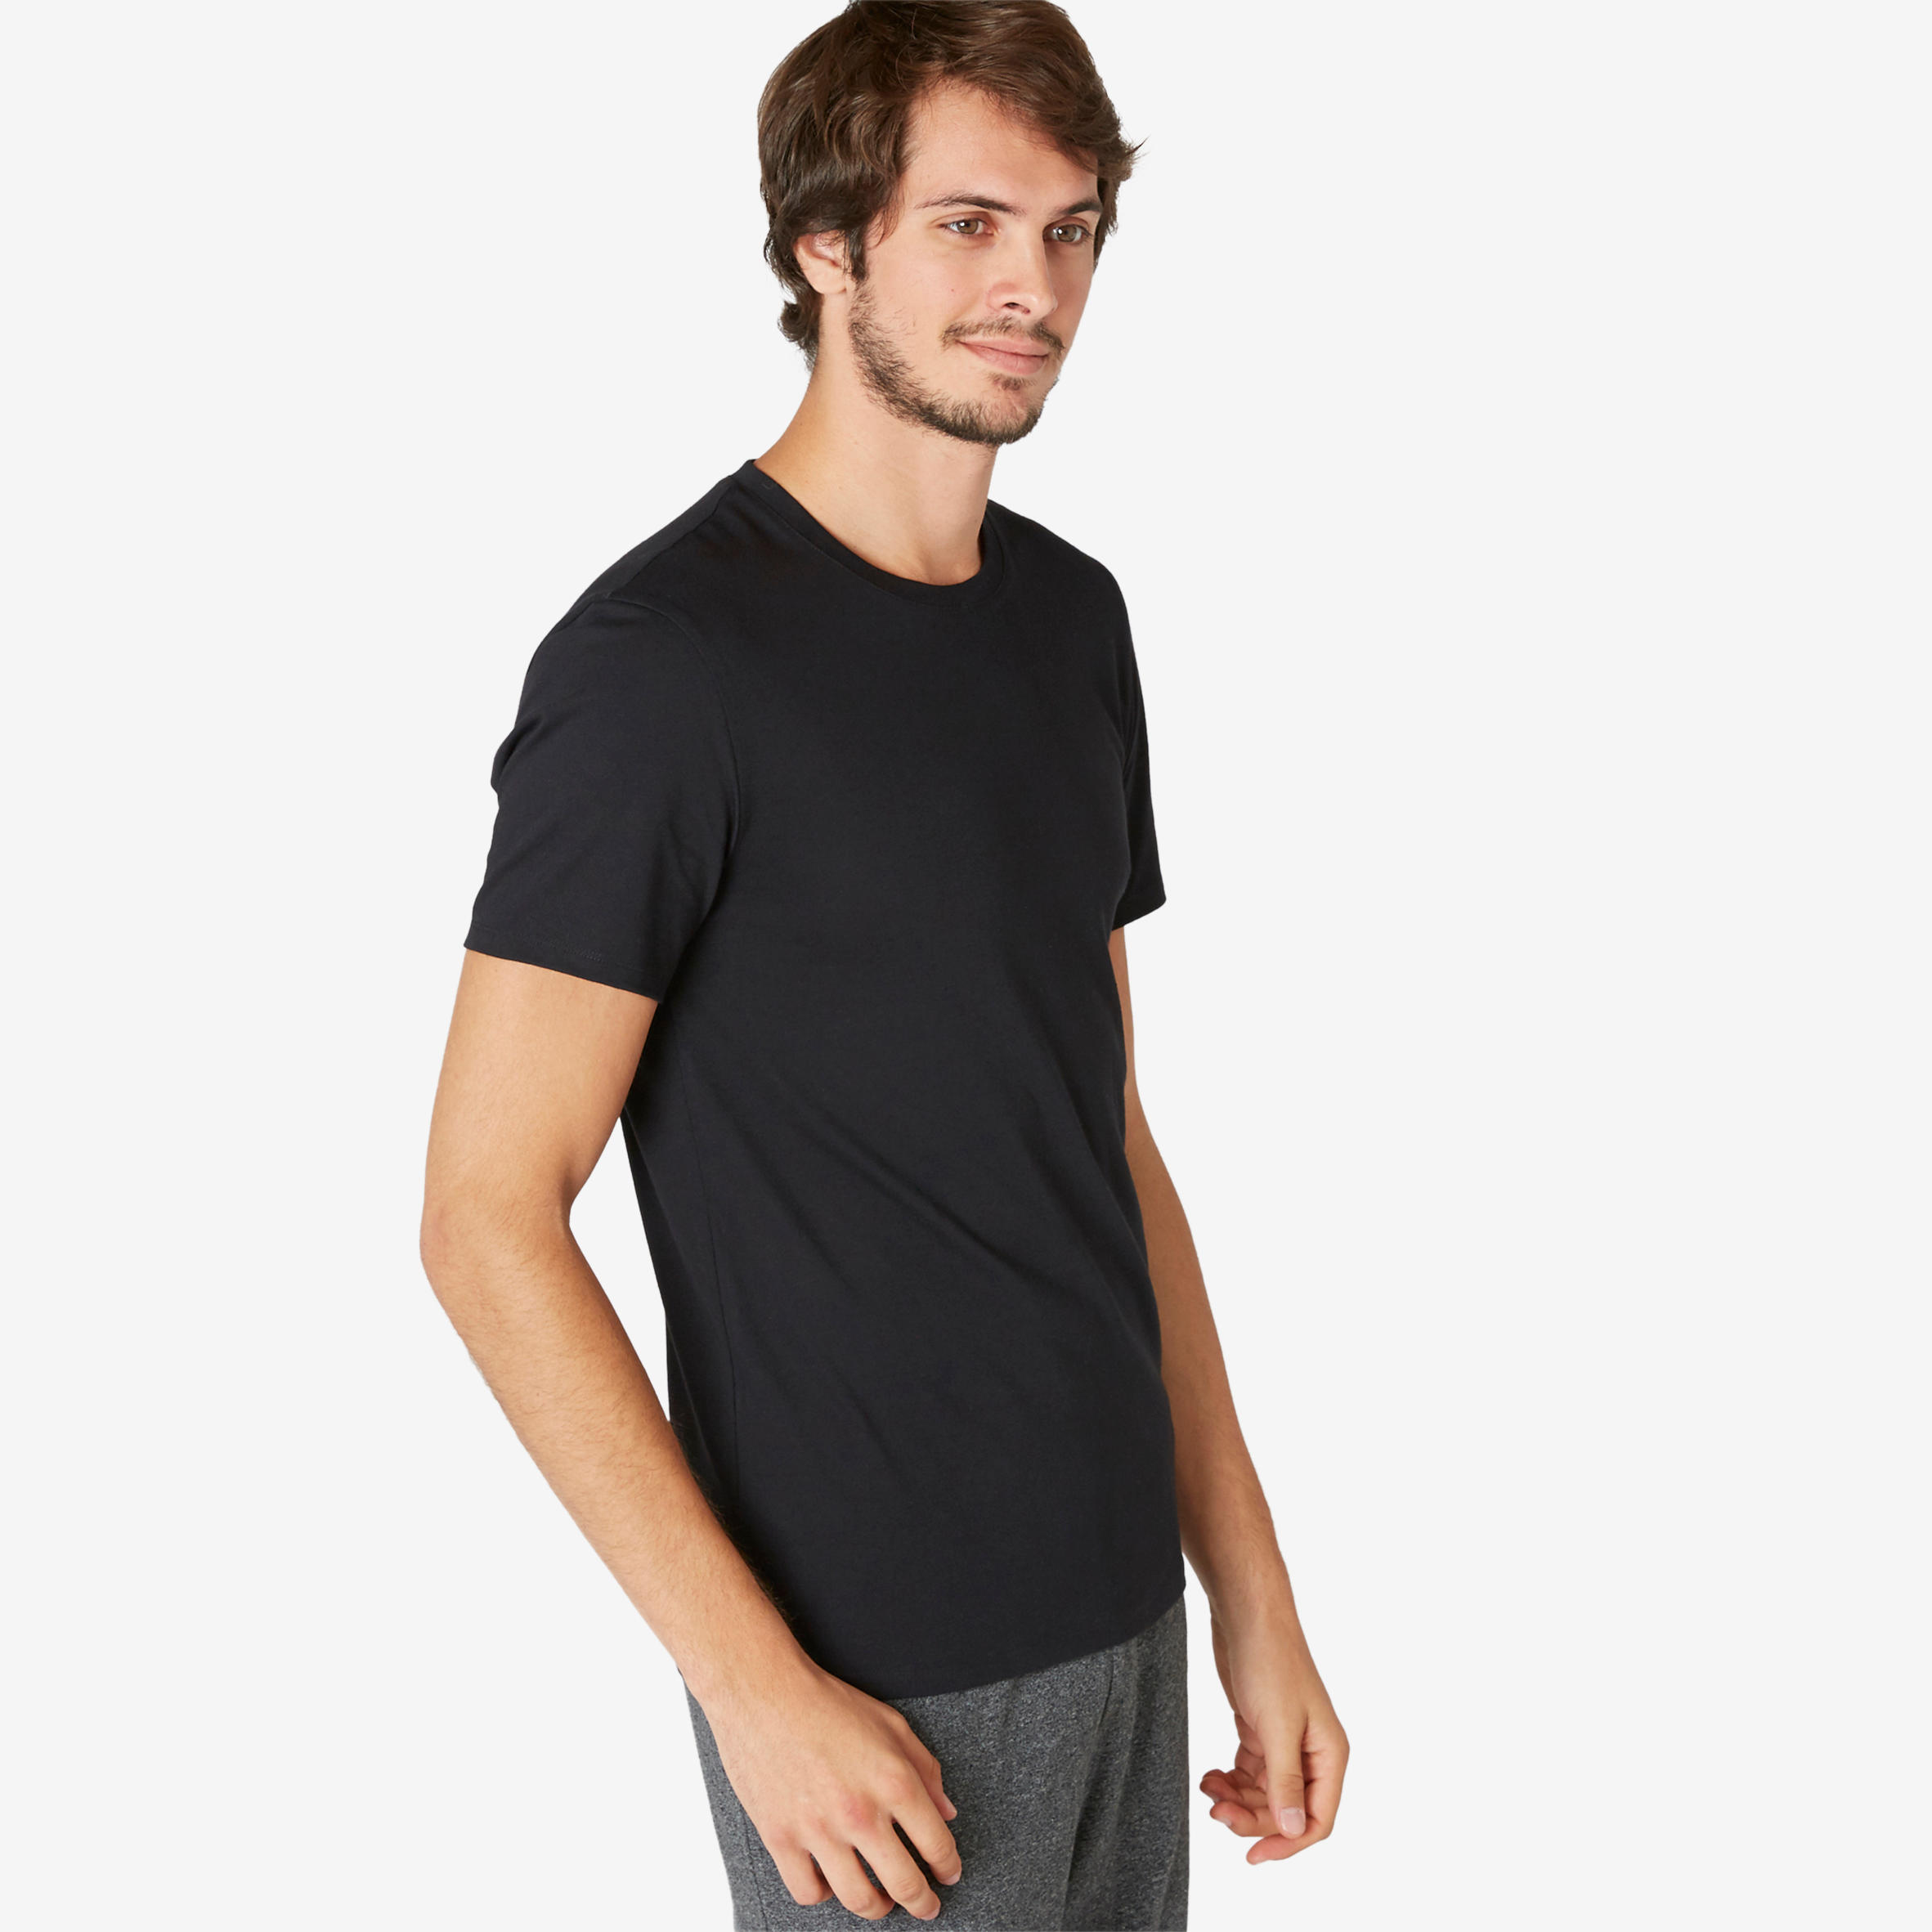 Men's Slim-Fit Fitness T-Shirt 500 - Black 18/19